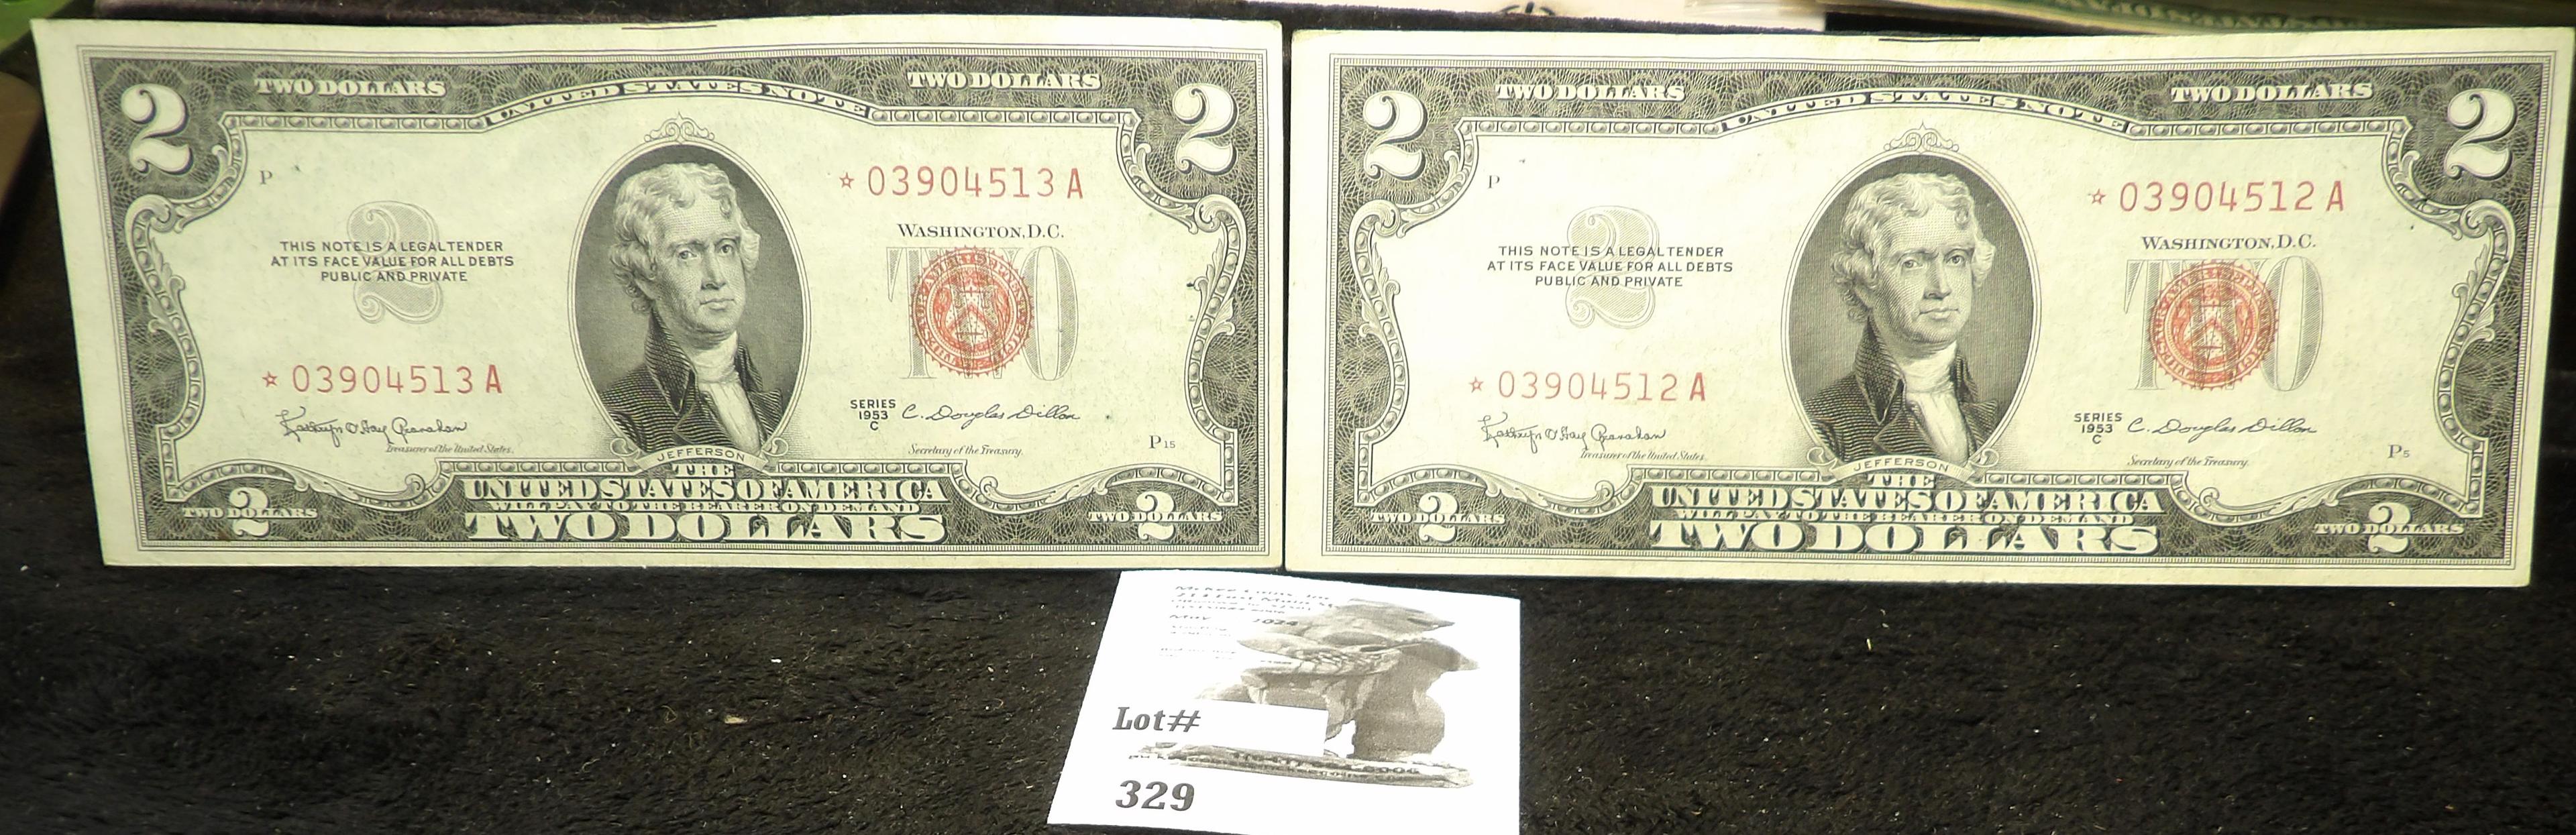 (2) Series 1953C $2 U.S. Notes, both Red Seals.